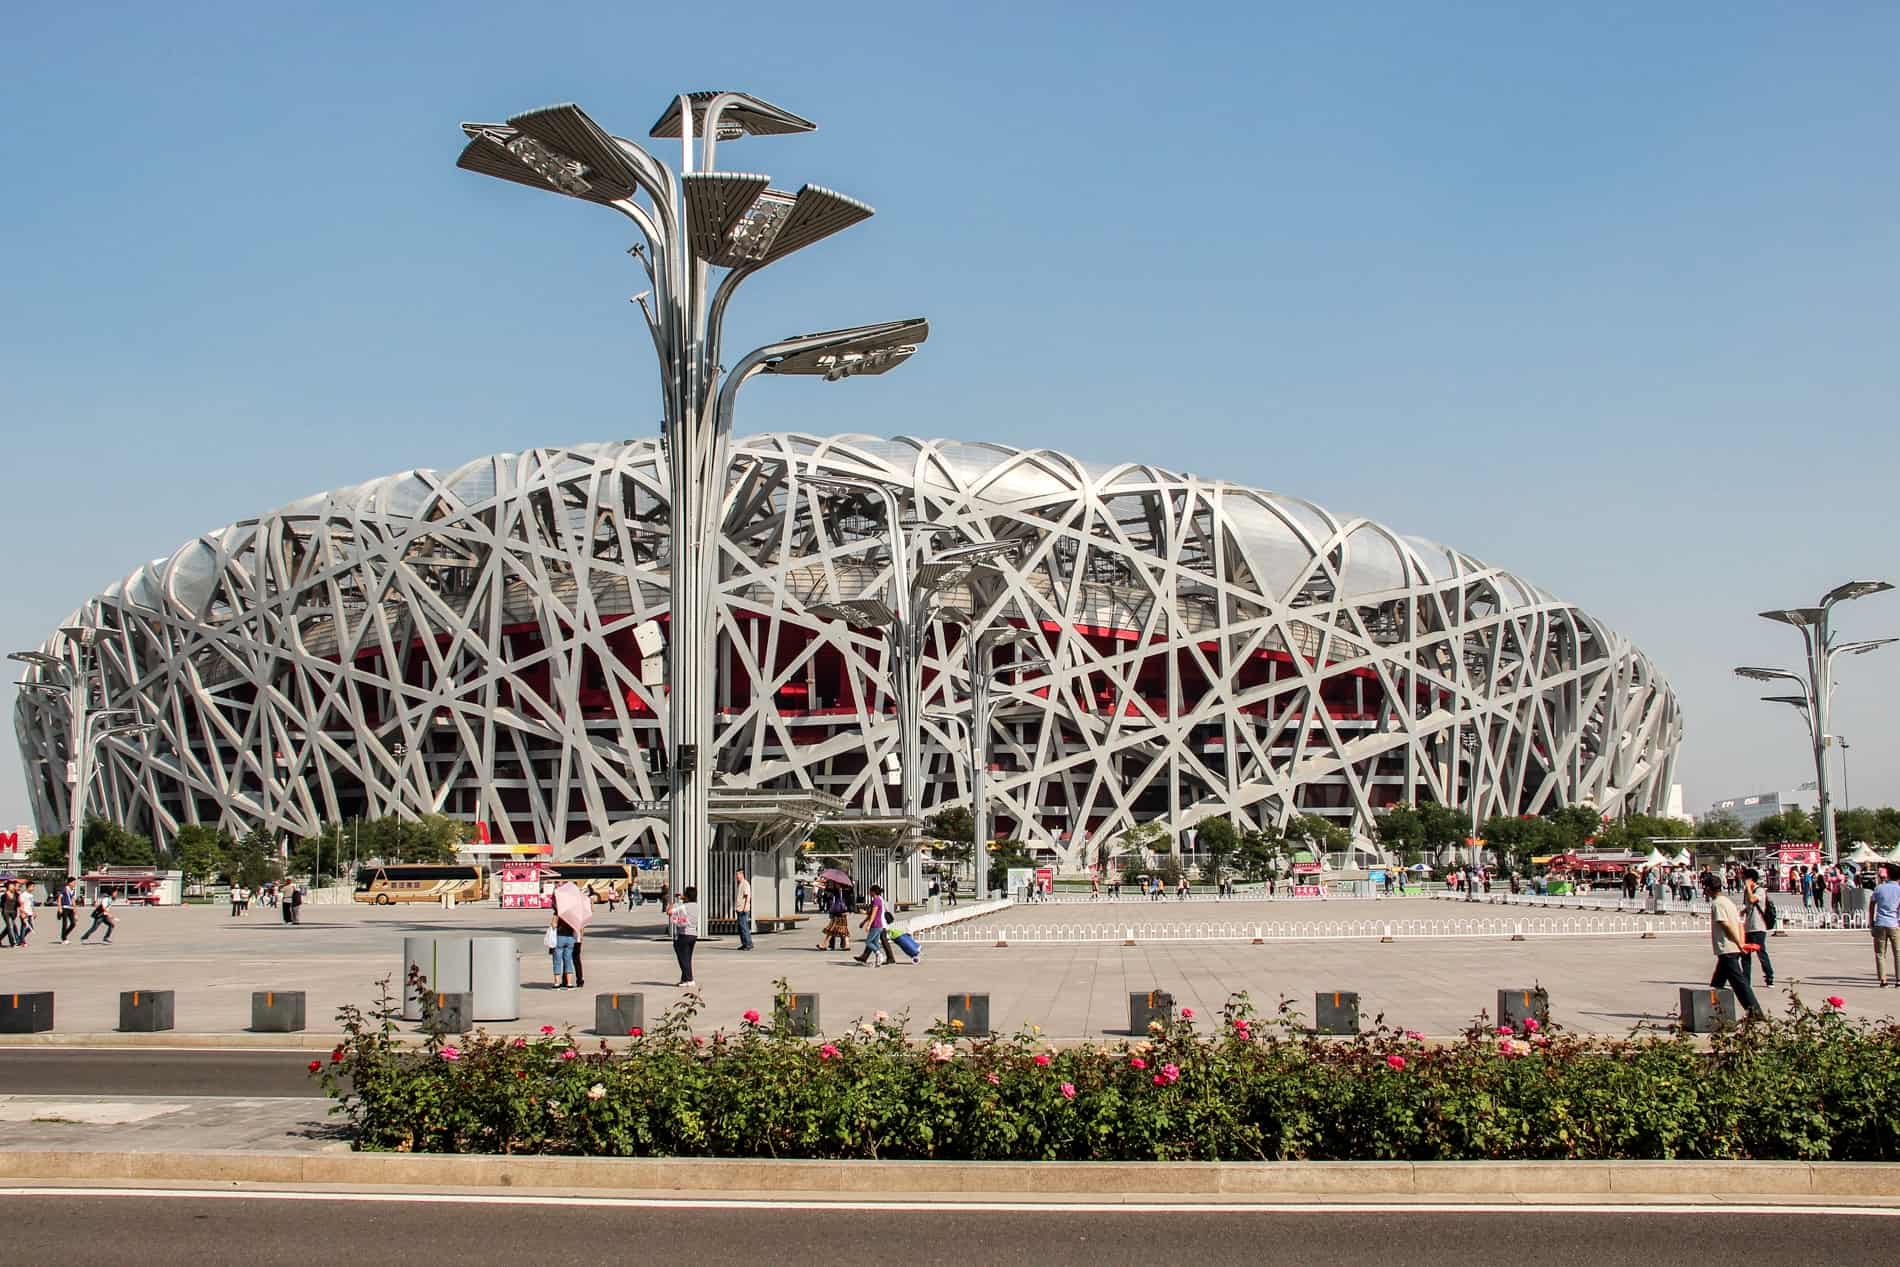 The Bird’s Nest designed on the National Stadium in Beijing's Olympic Park